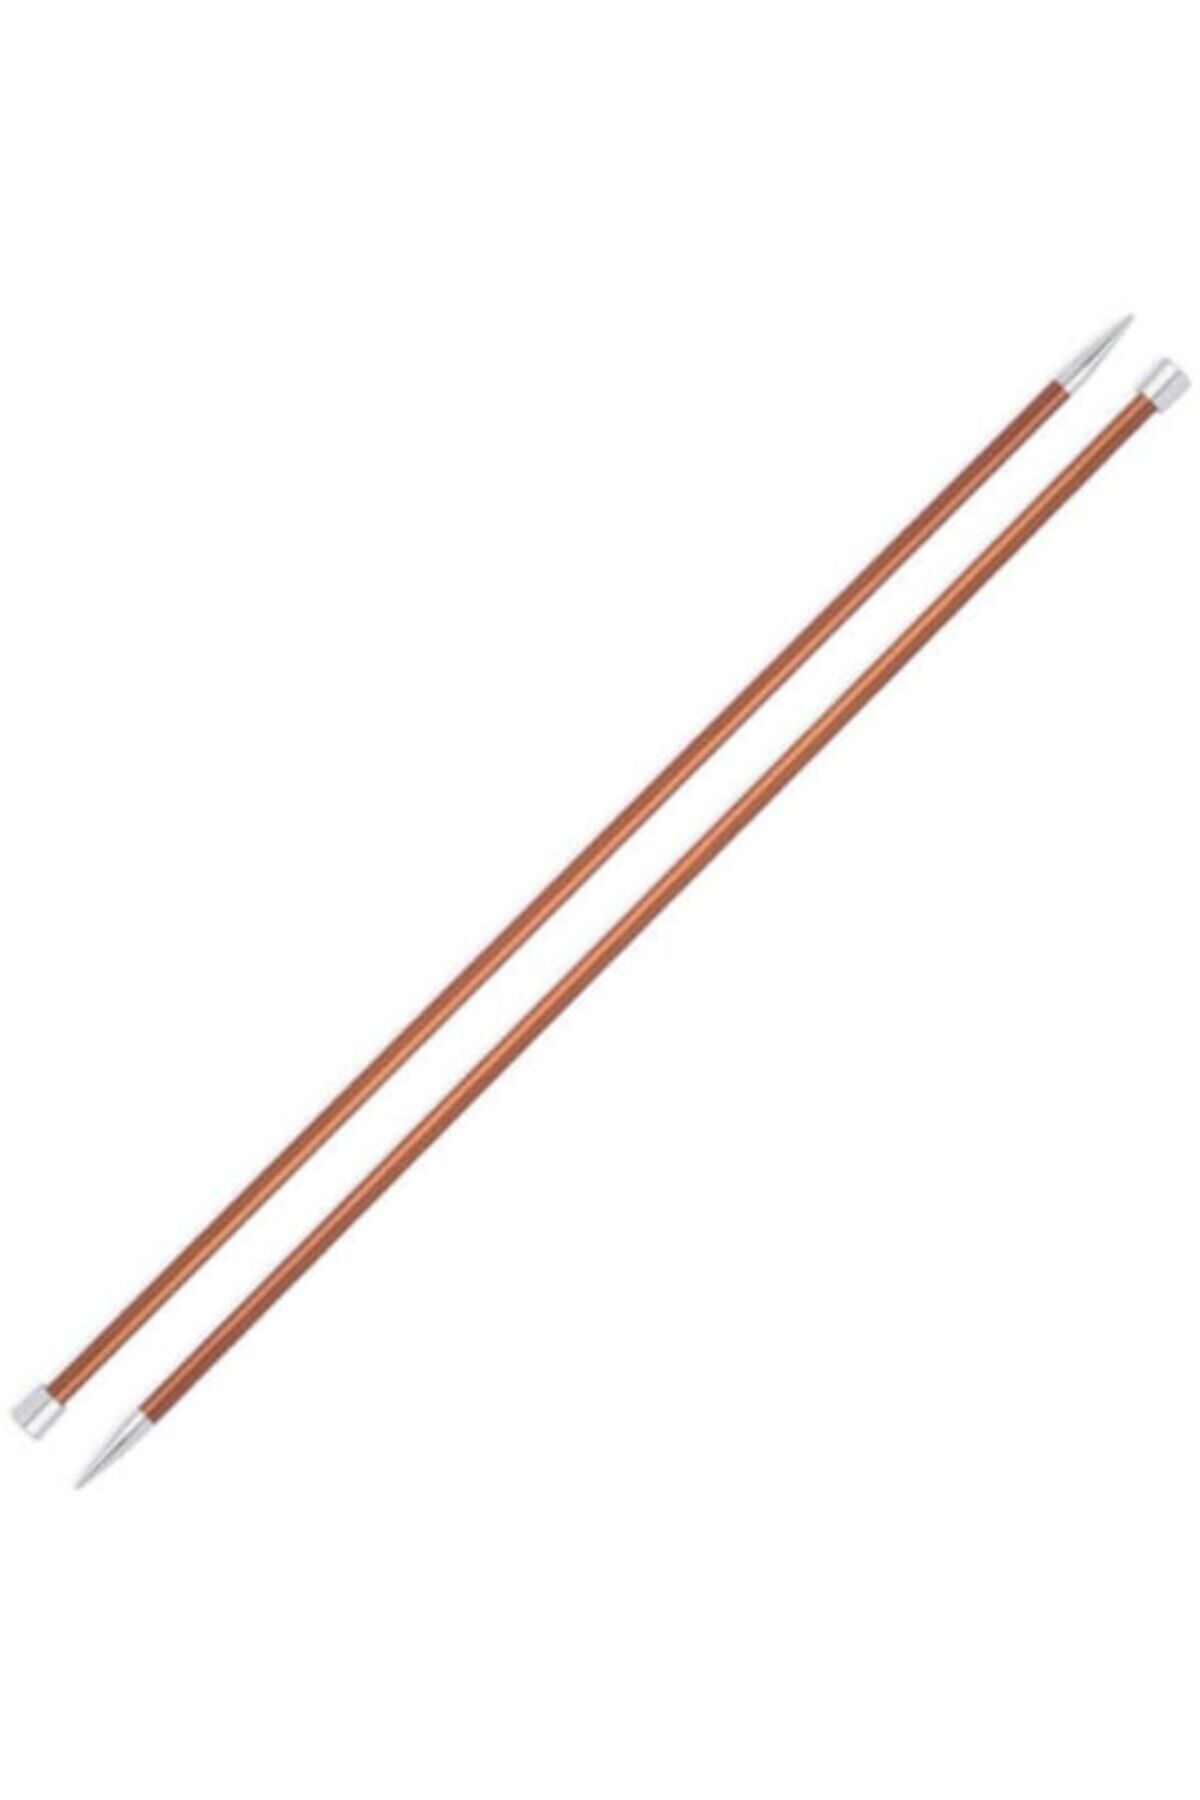 KnitPro Zing 5,5 Mm 35 Cm Kahverengi Metal Örgü Şişi - 47302